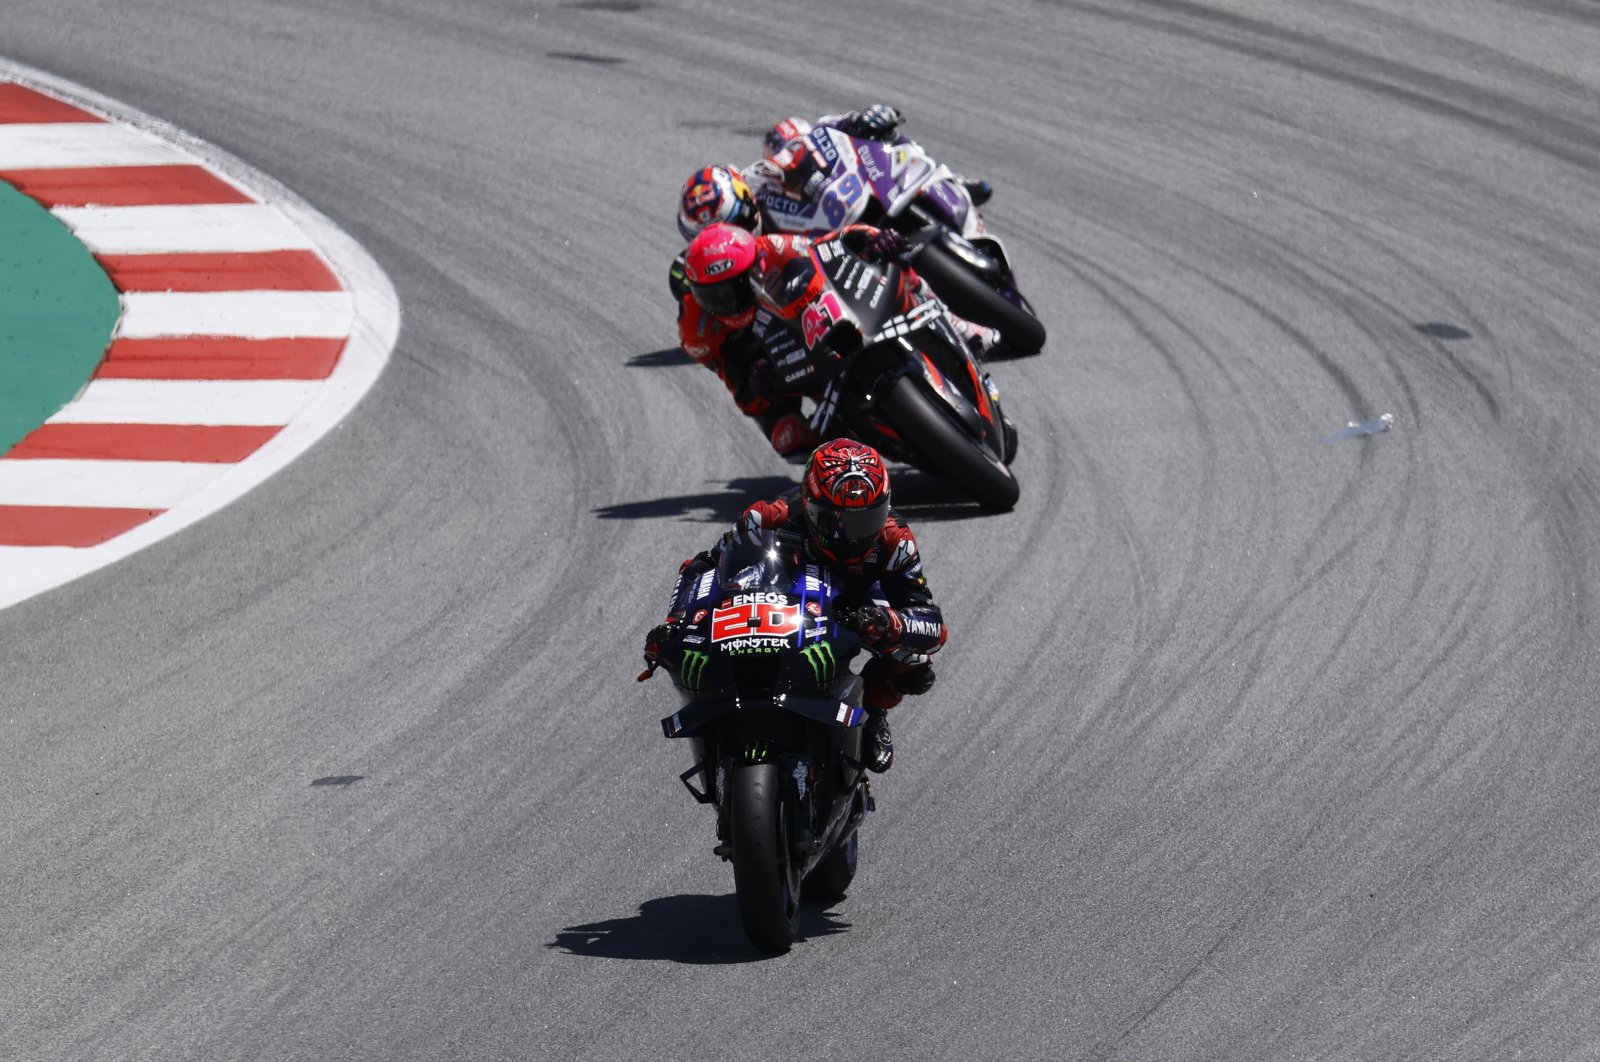 Fabio Quartararo leads in the race at MotoGP Spanish Grand Prix, in Barcelona, Spain, June 5, 2022. (AA PHOTO)